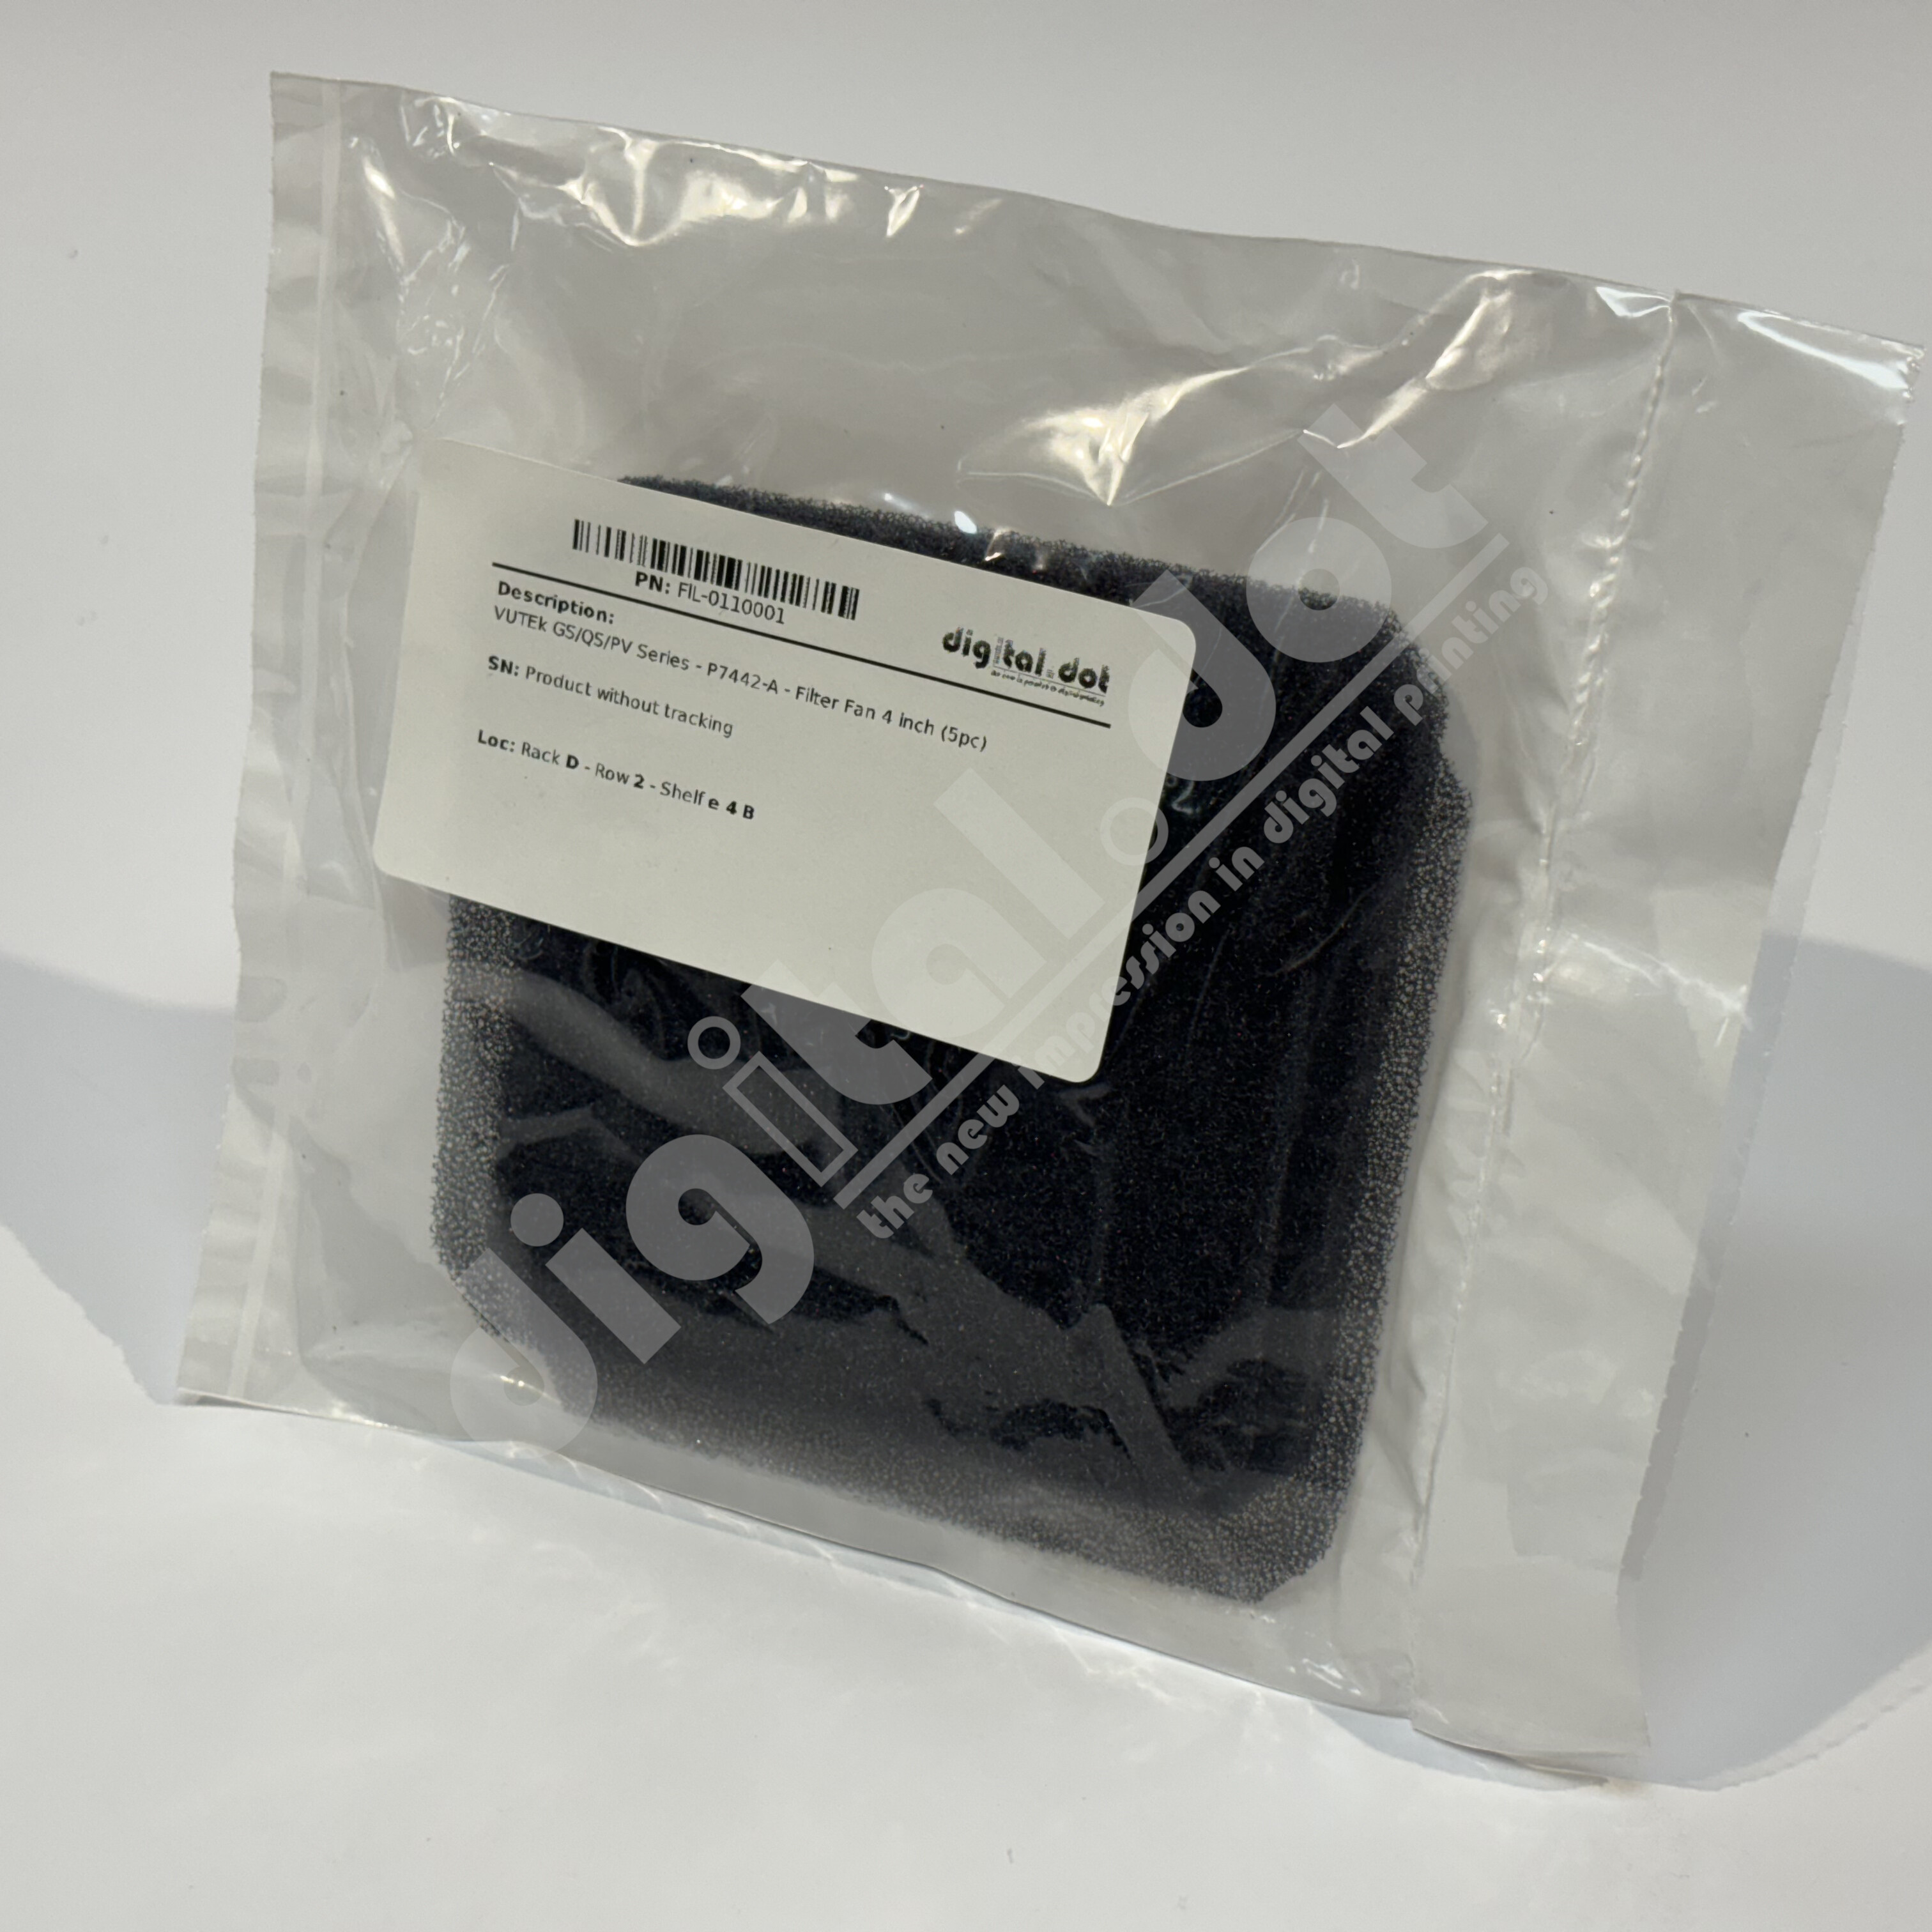 VUTEk GS/QS/PV Series - P7442-A - Filter Fan 4 inch (5pc)